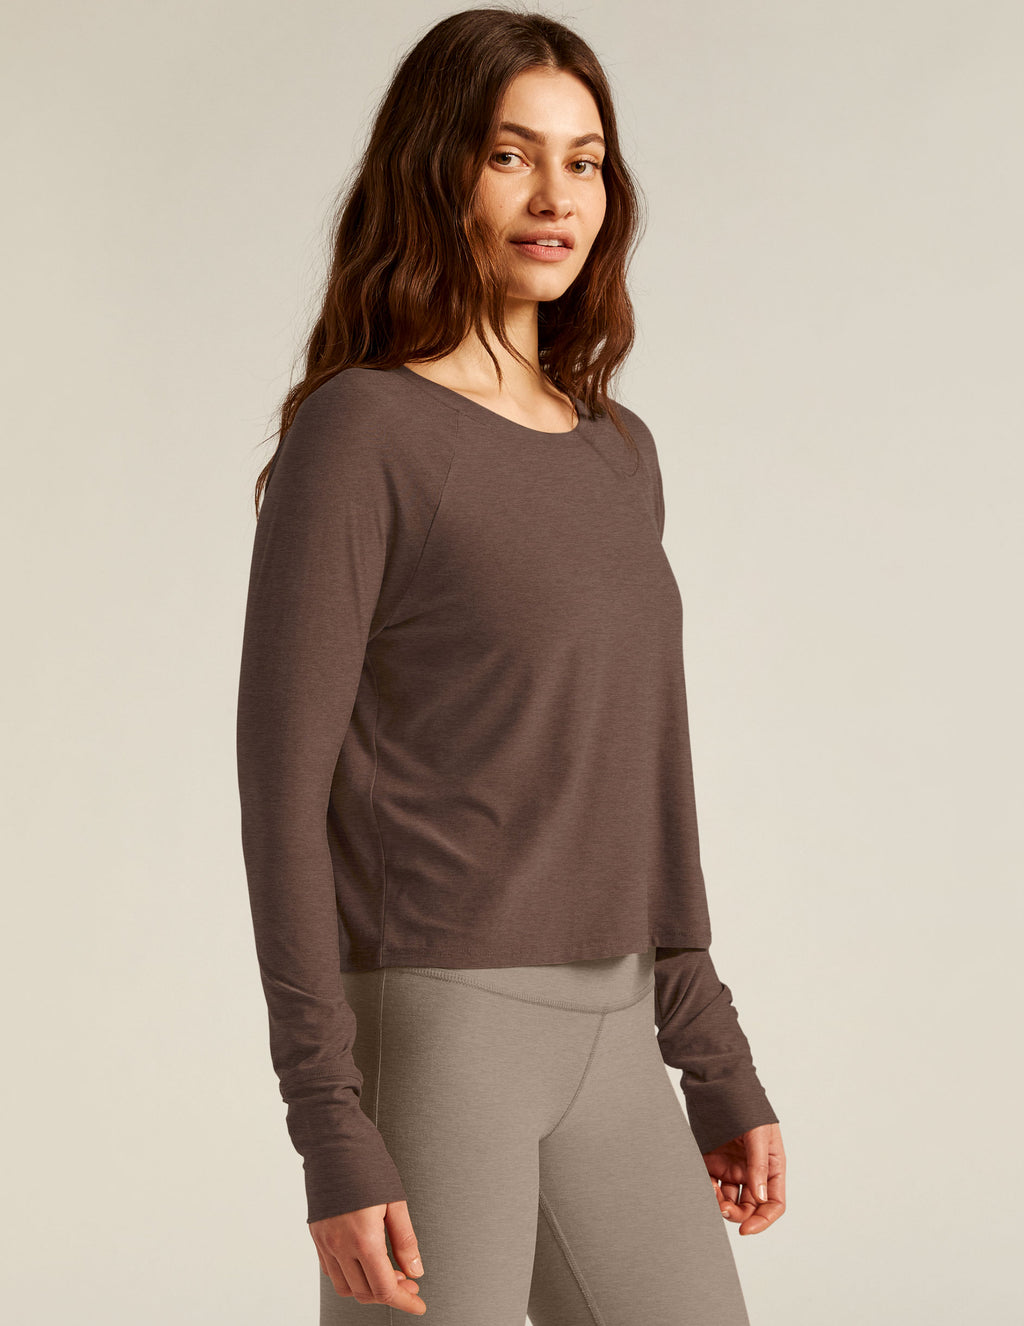 Beyond Yoga Open Back Long Sleeve Top Size Medium Gray